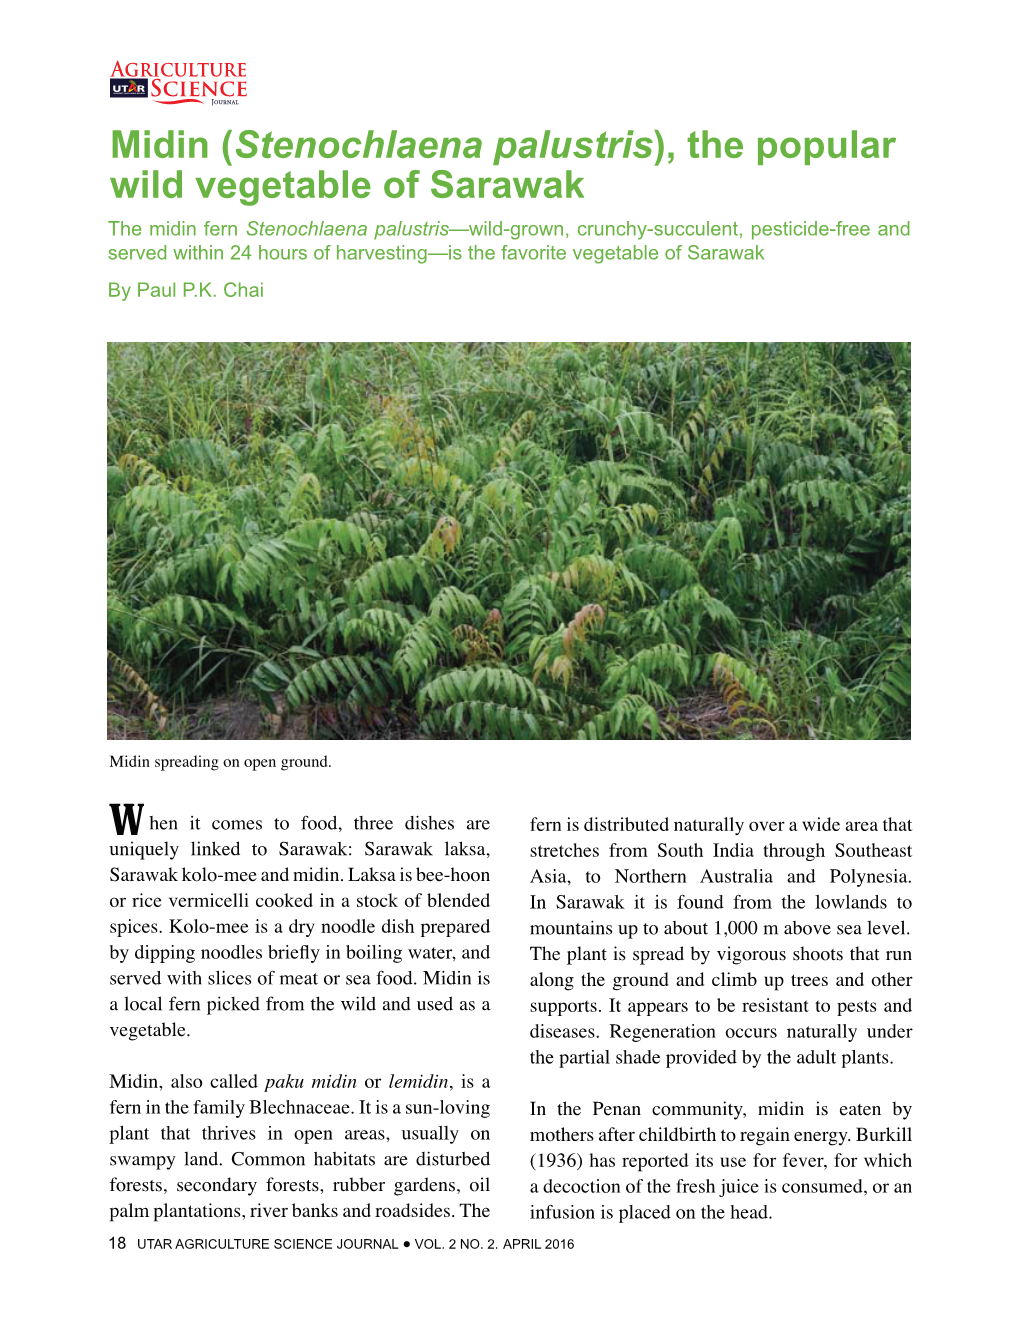 Midin (Stenochlaena Palustris), the Popular Wild Vegetable of Sarawak